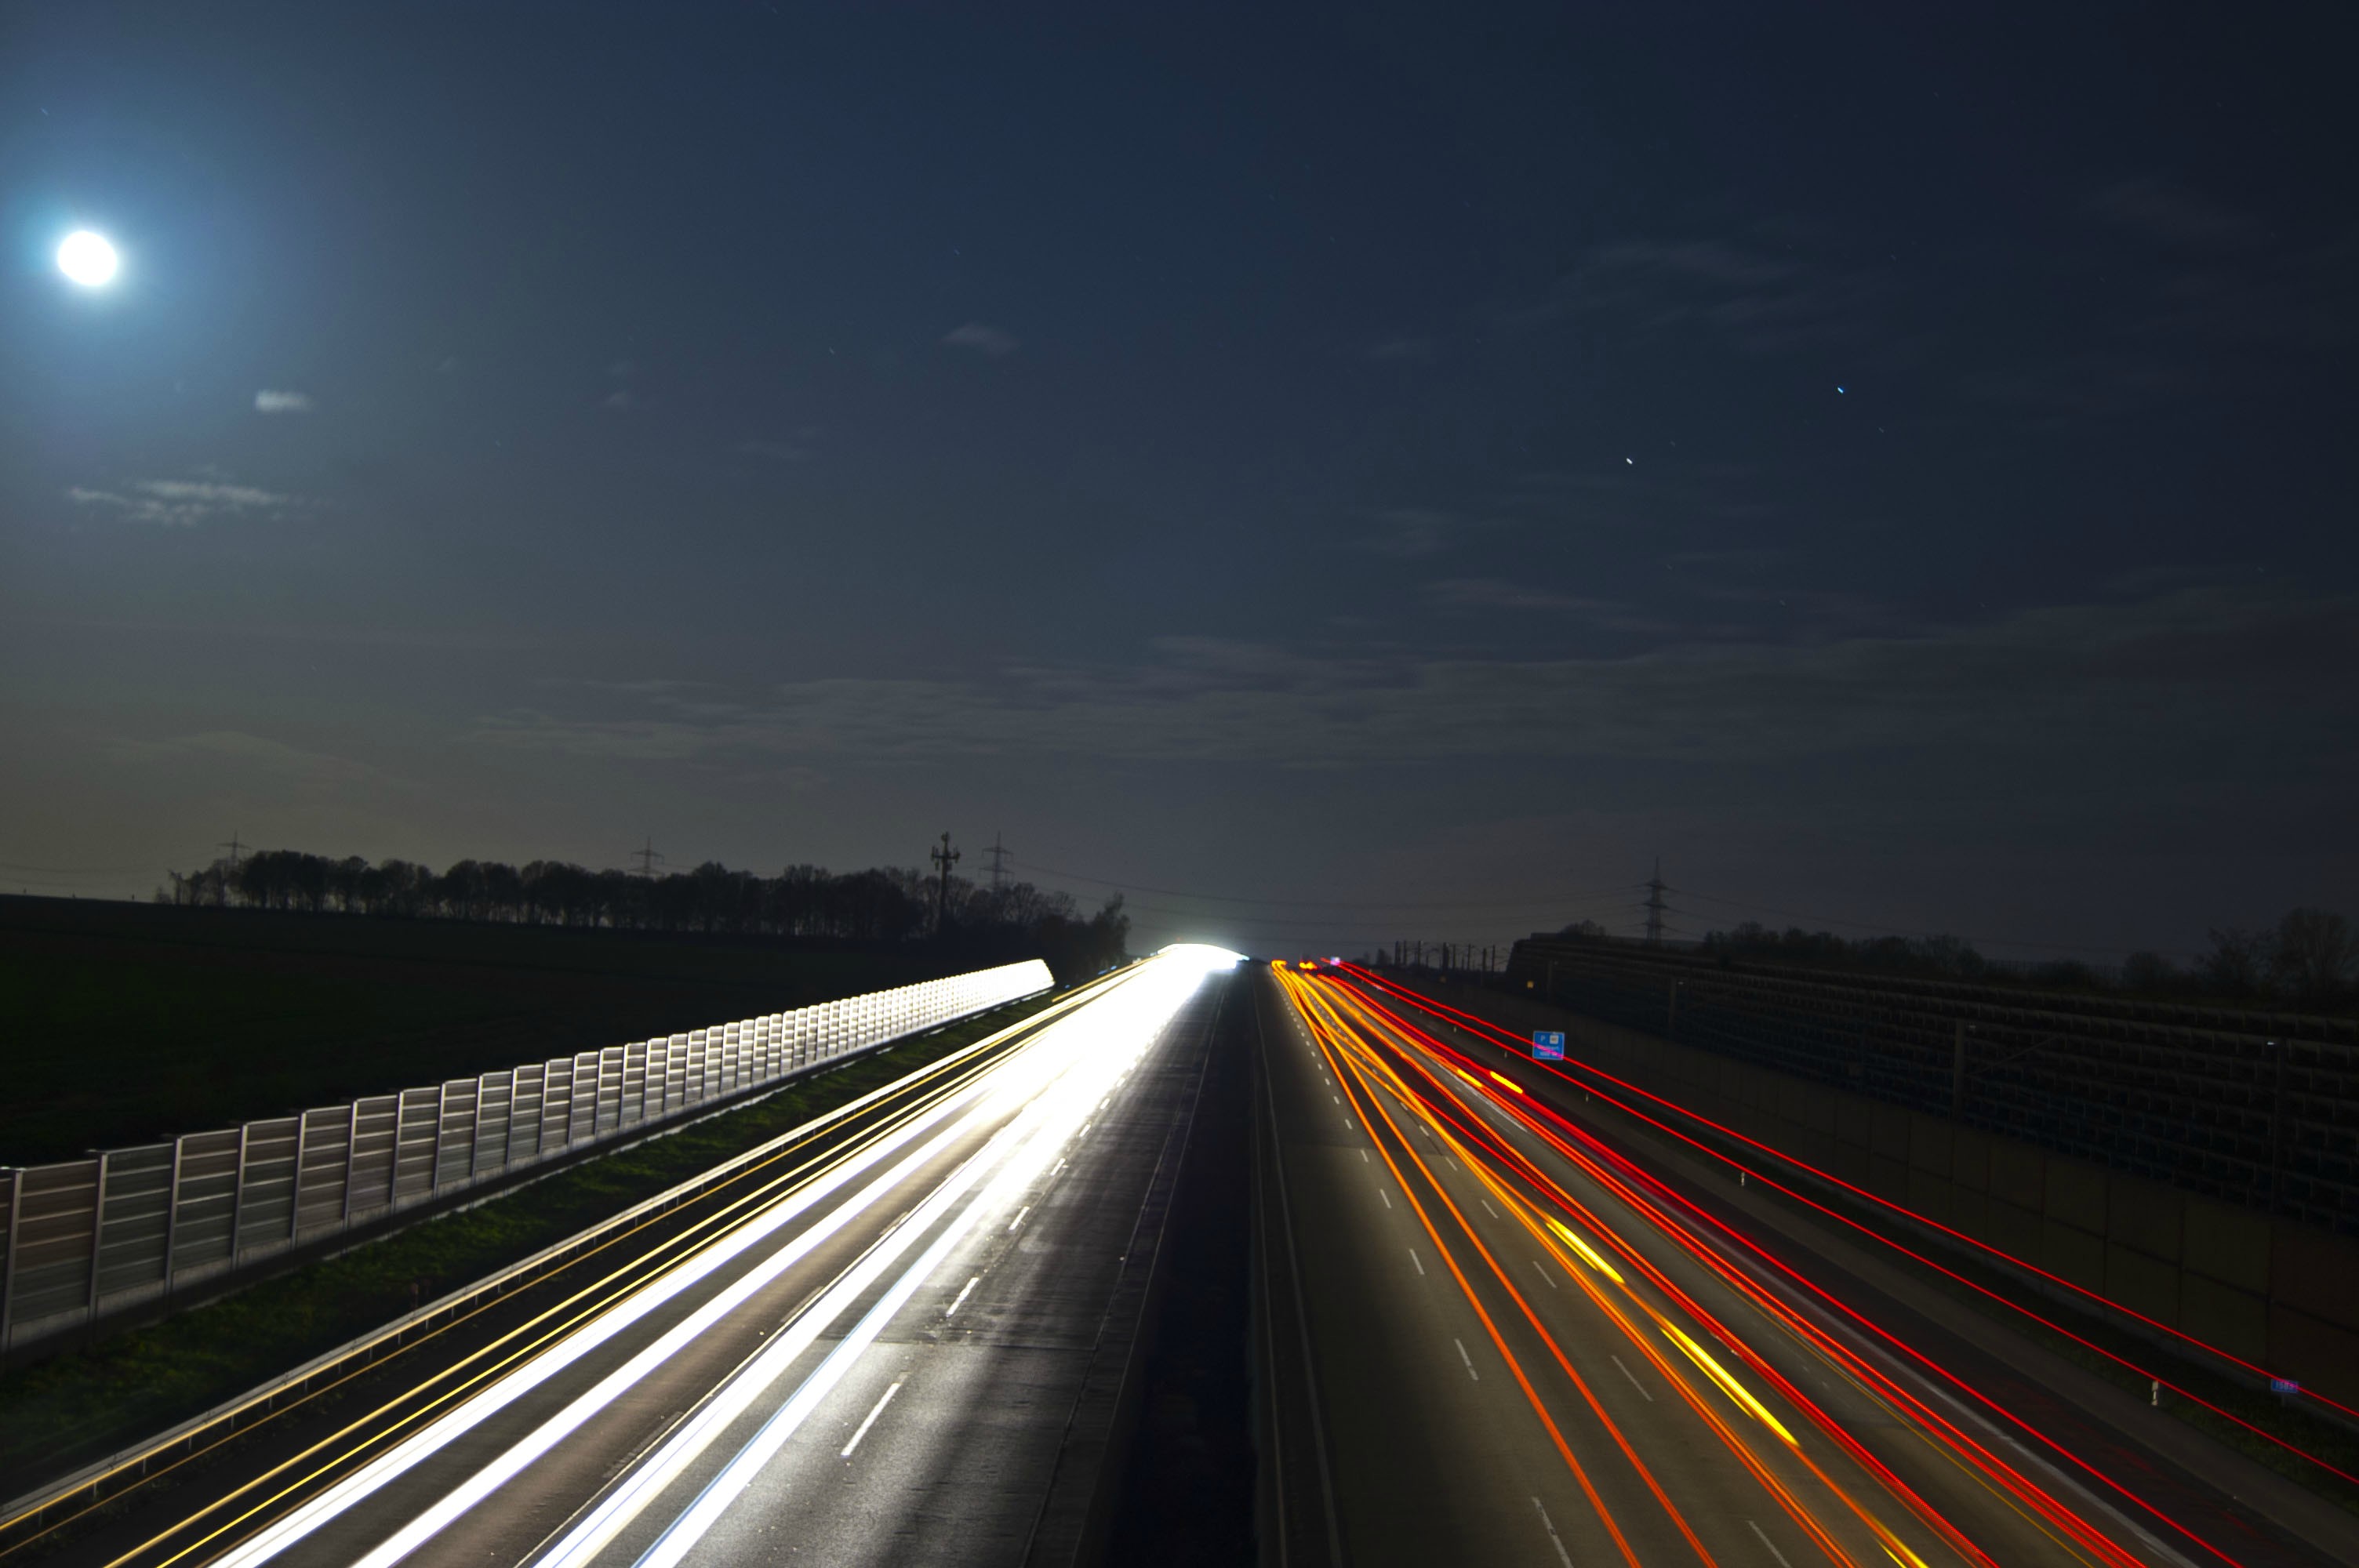 Autobahn at night (x-post from r/pics) : Autobahn